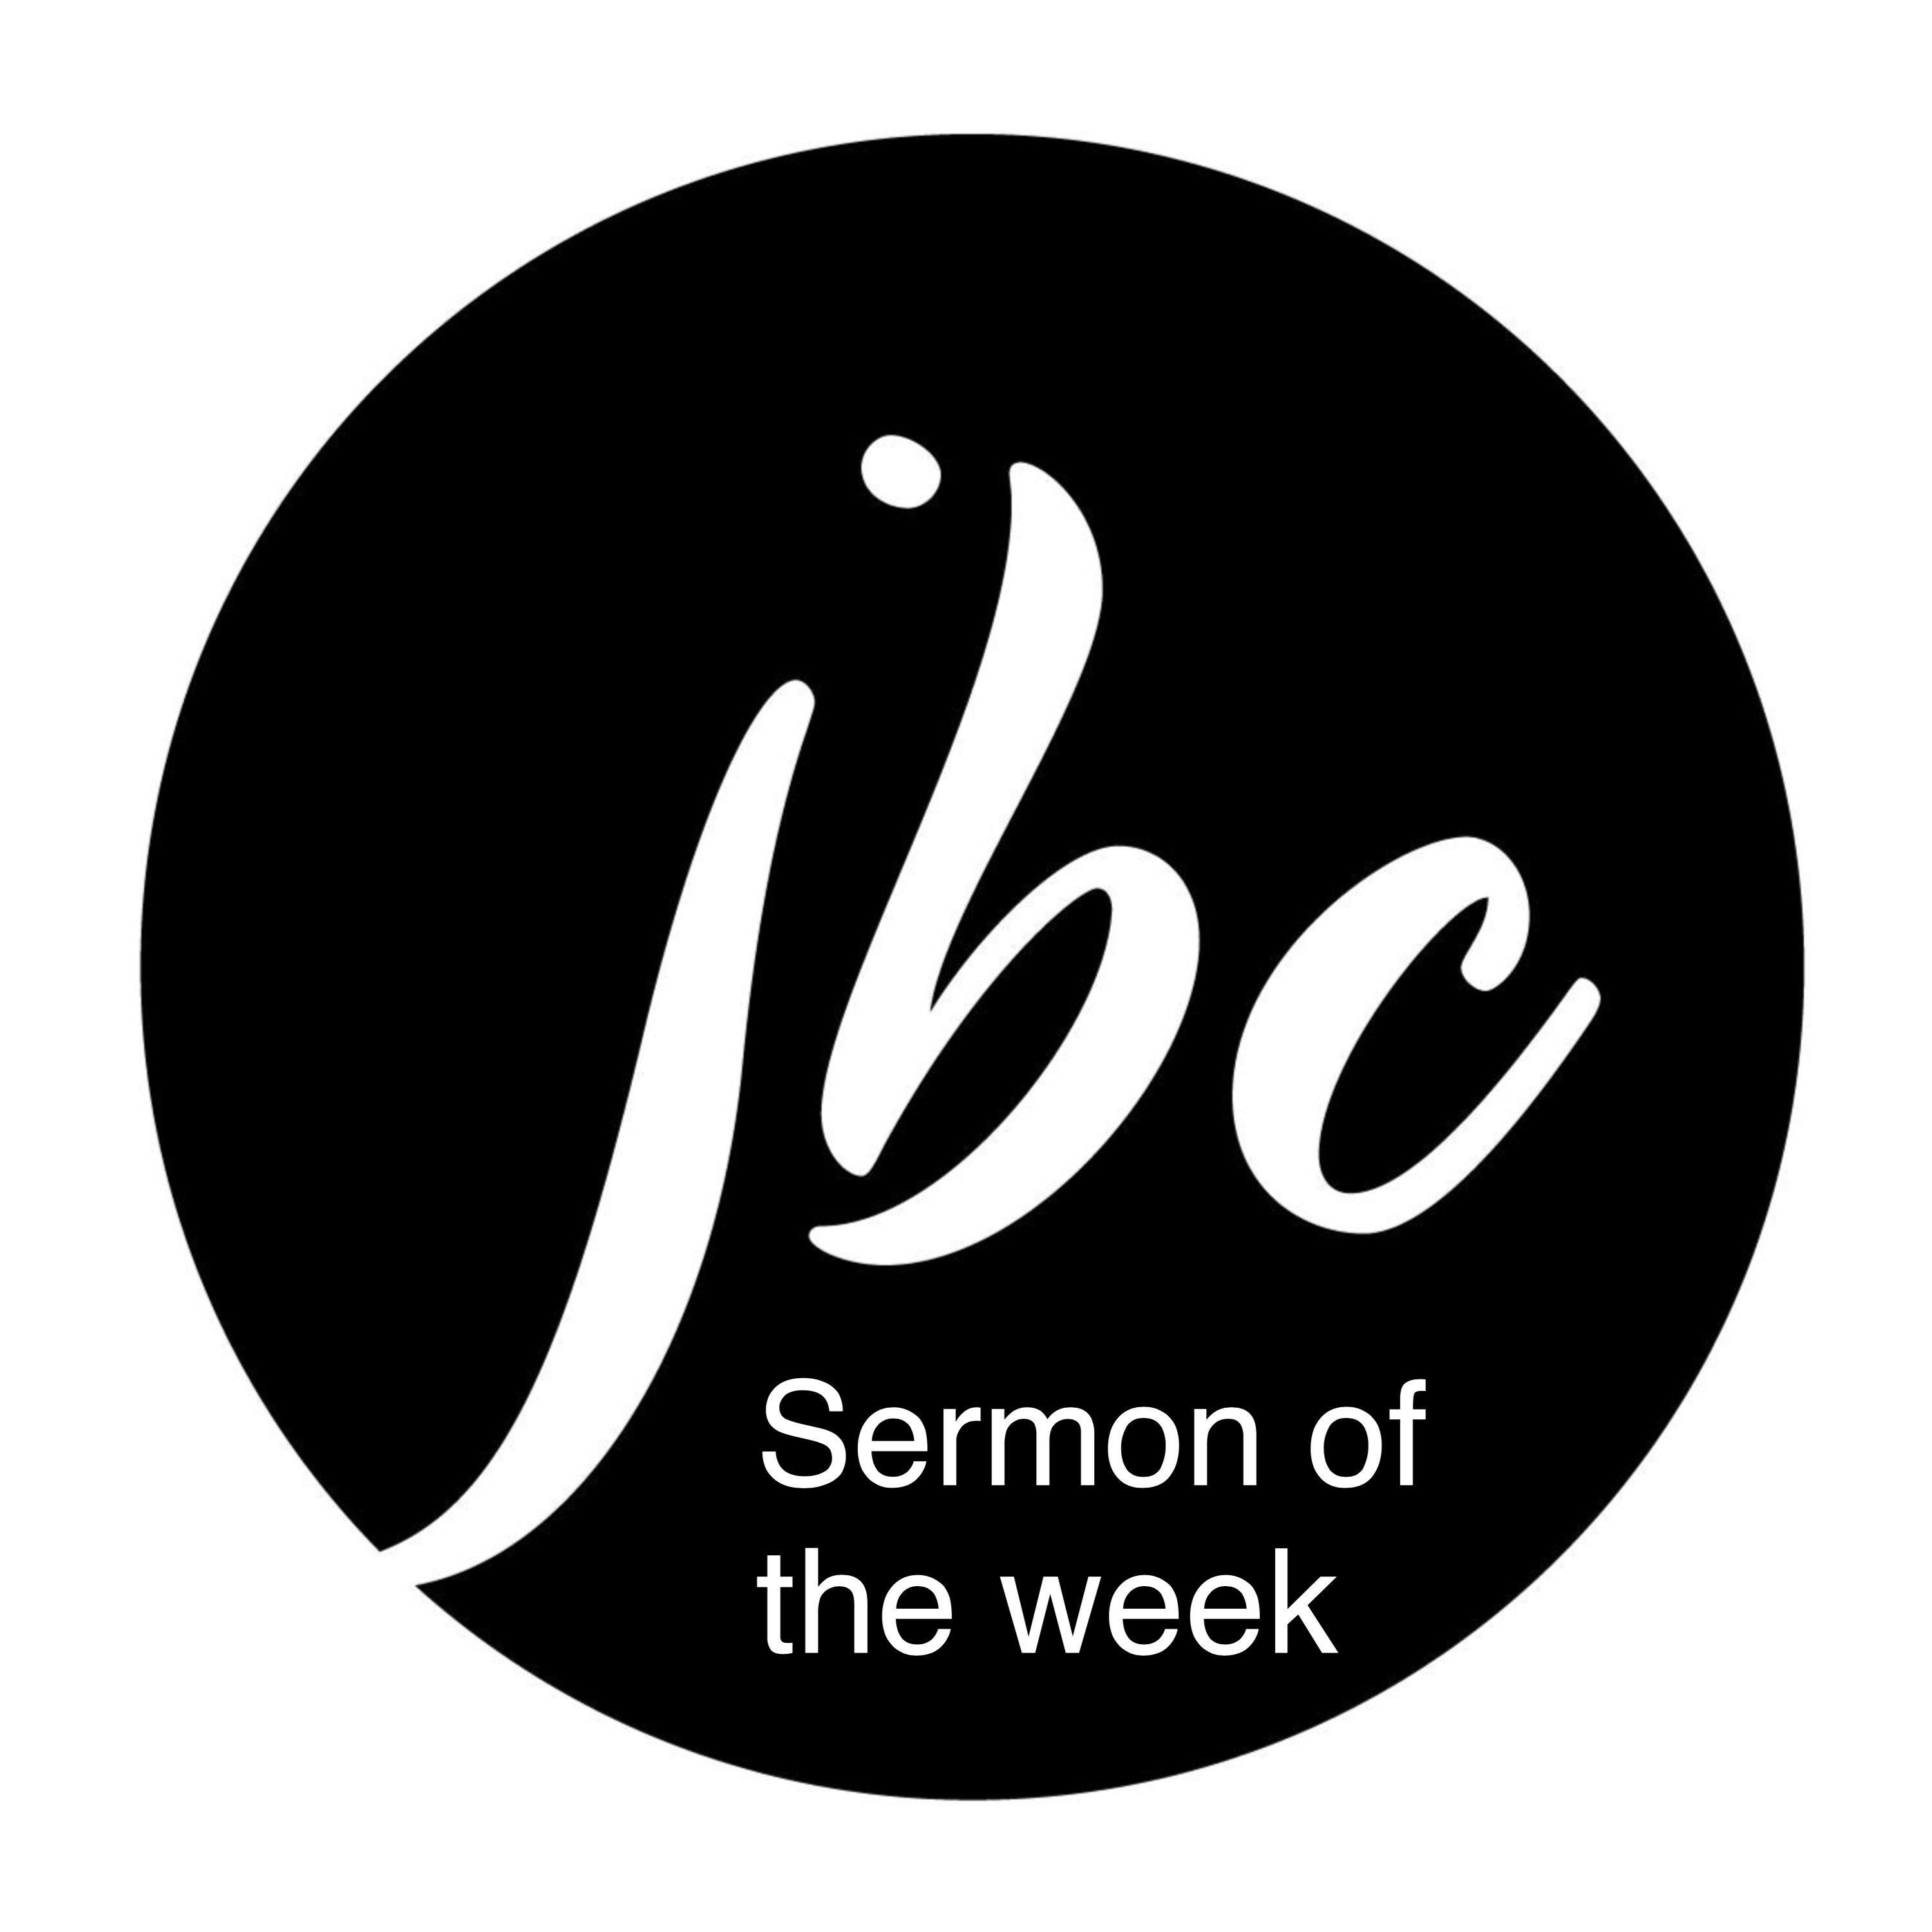 JBC Sermon of the Week